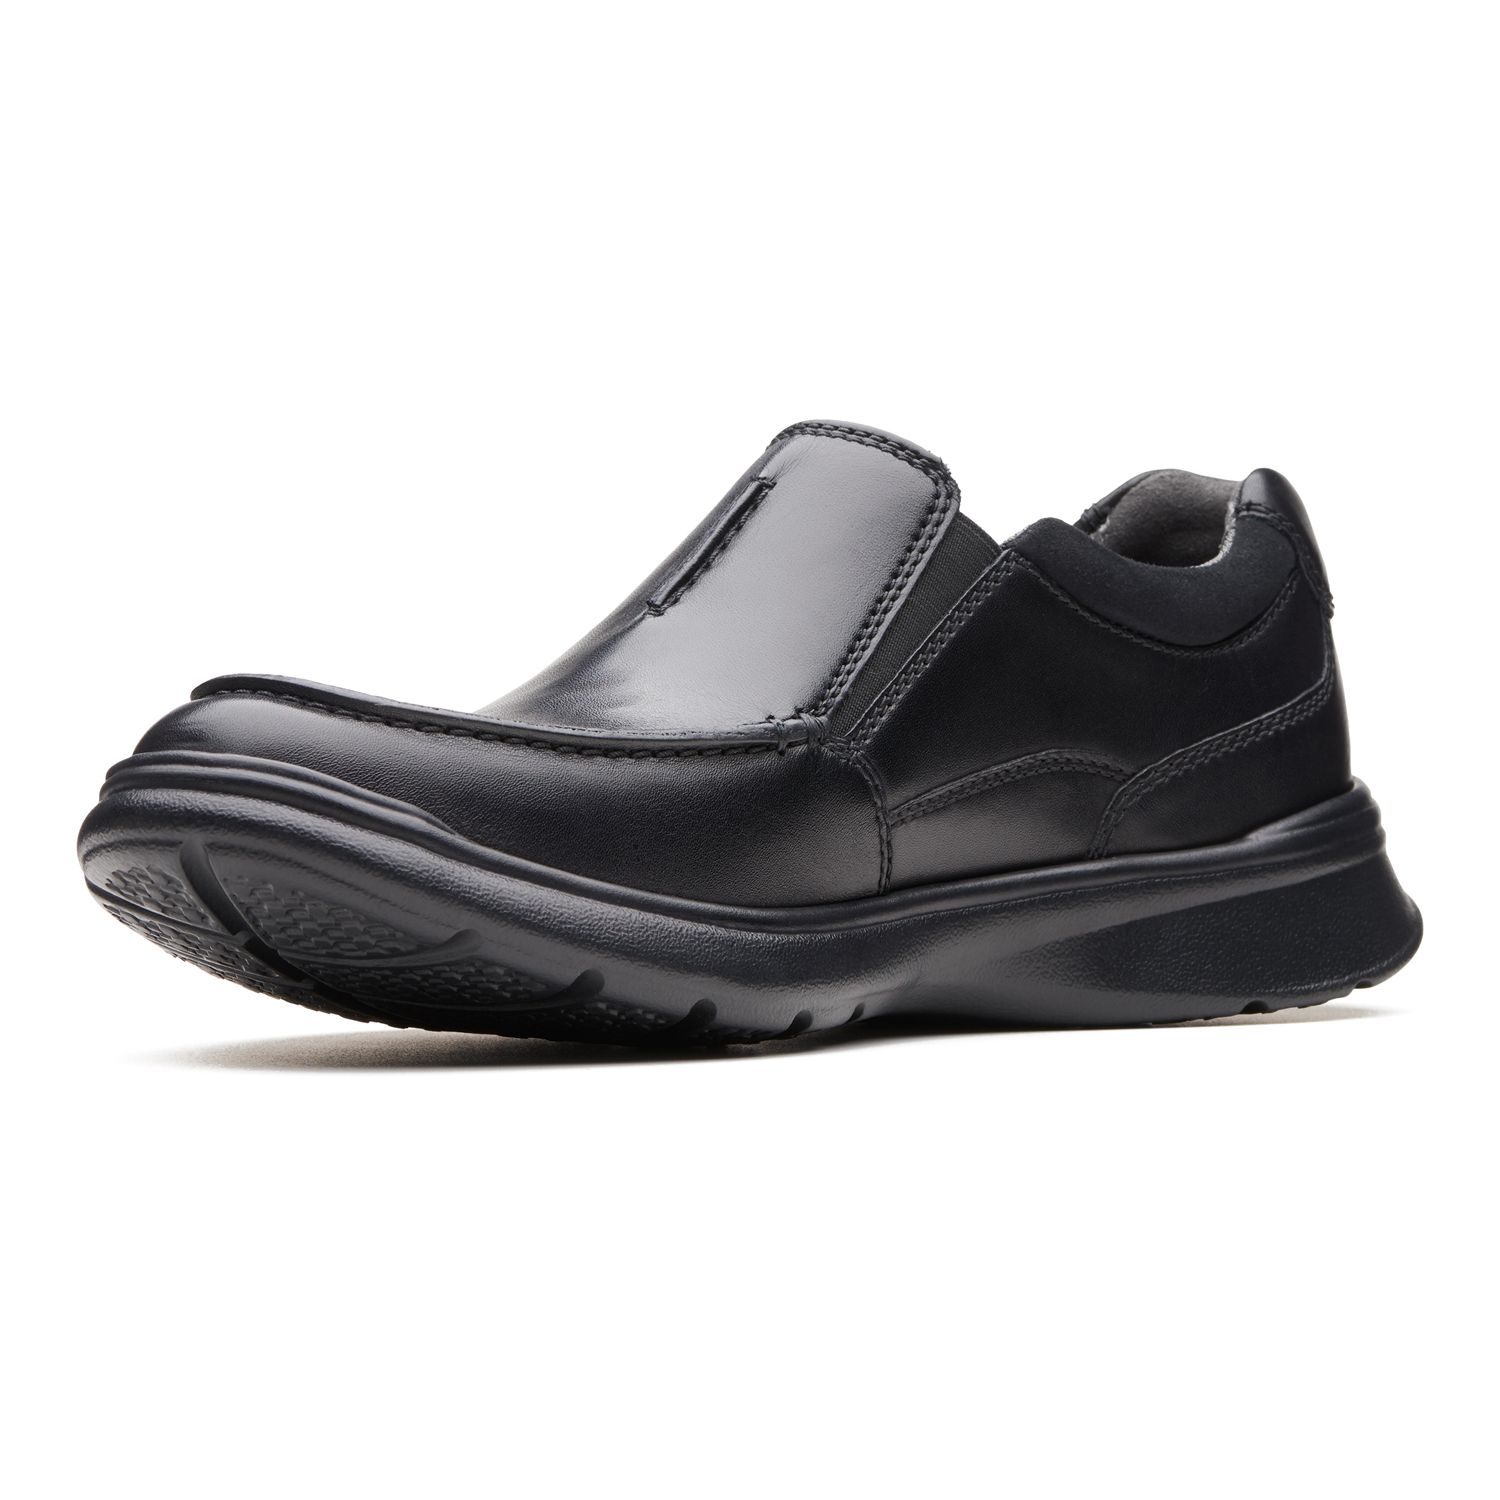 Clarks Men's Shoes | Kohl's